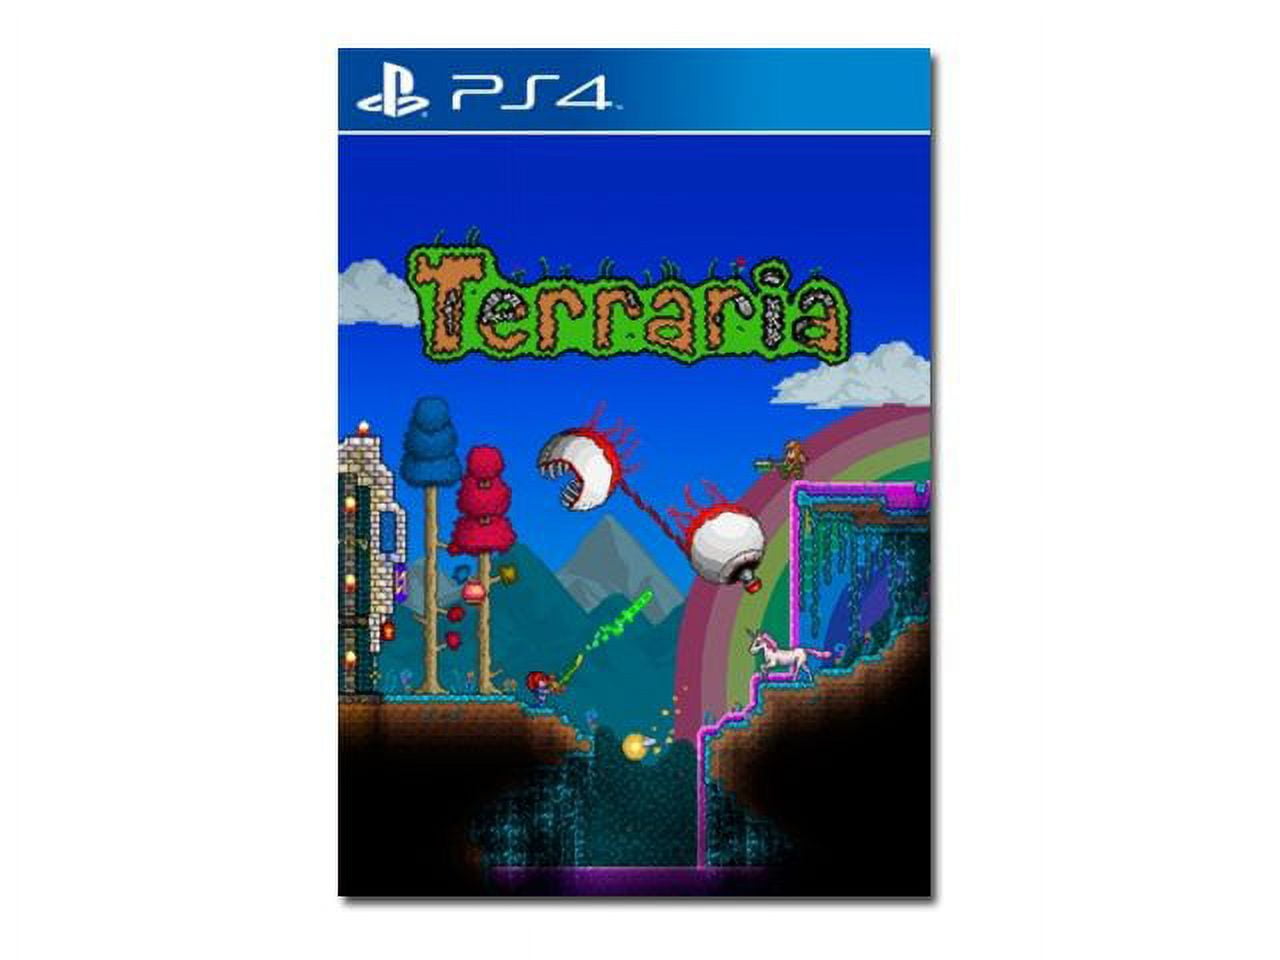 Buy Terraria